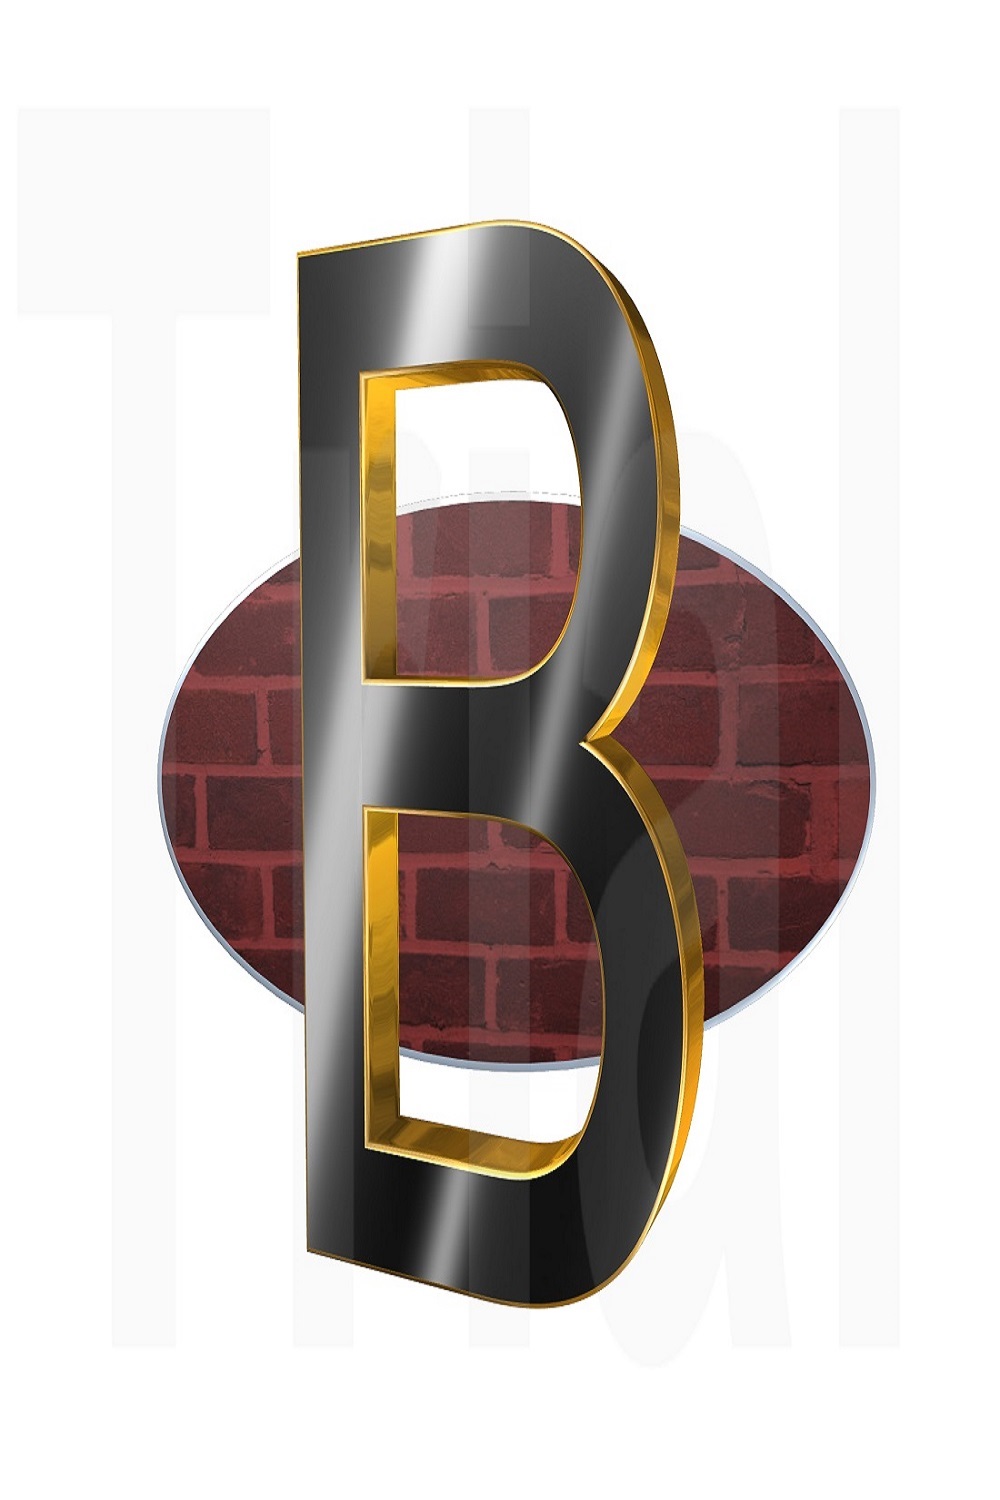 B logo pinterest preview image.